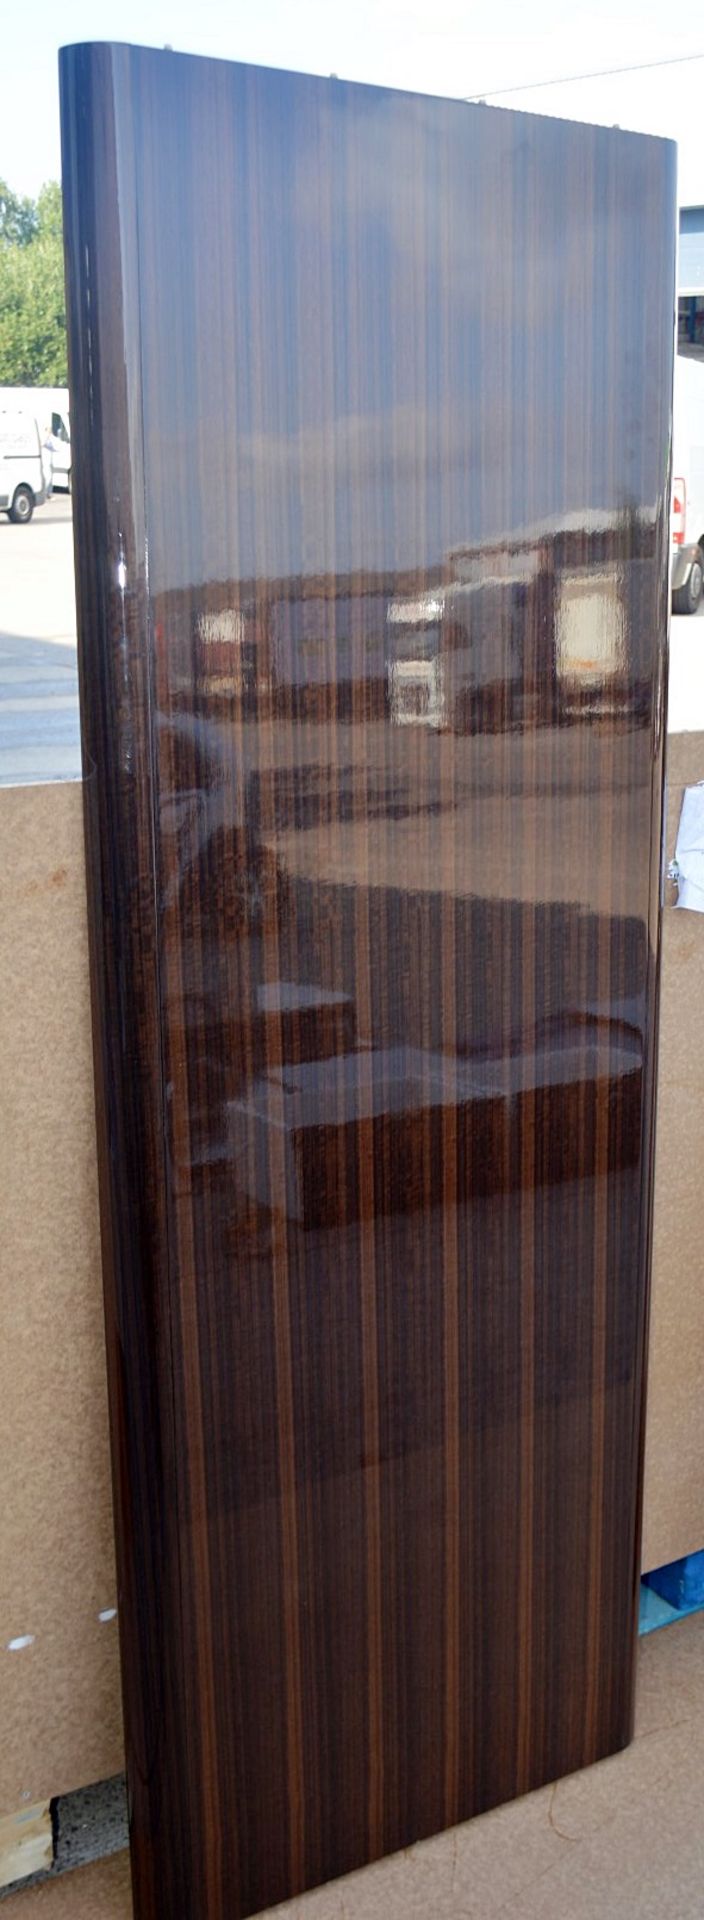 1 x FRATO Bespoke 'Siena' Wardrobe With A High Gloss Brown Wood Veneer Finish - Original RRP £18,890 - Image 12 of 21